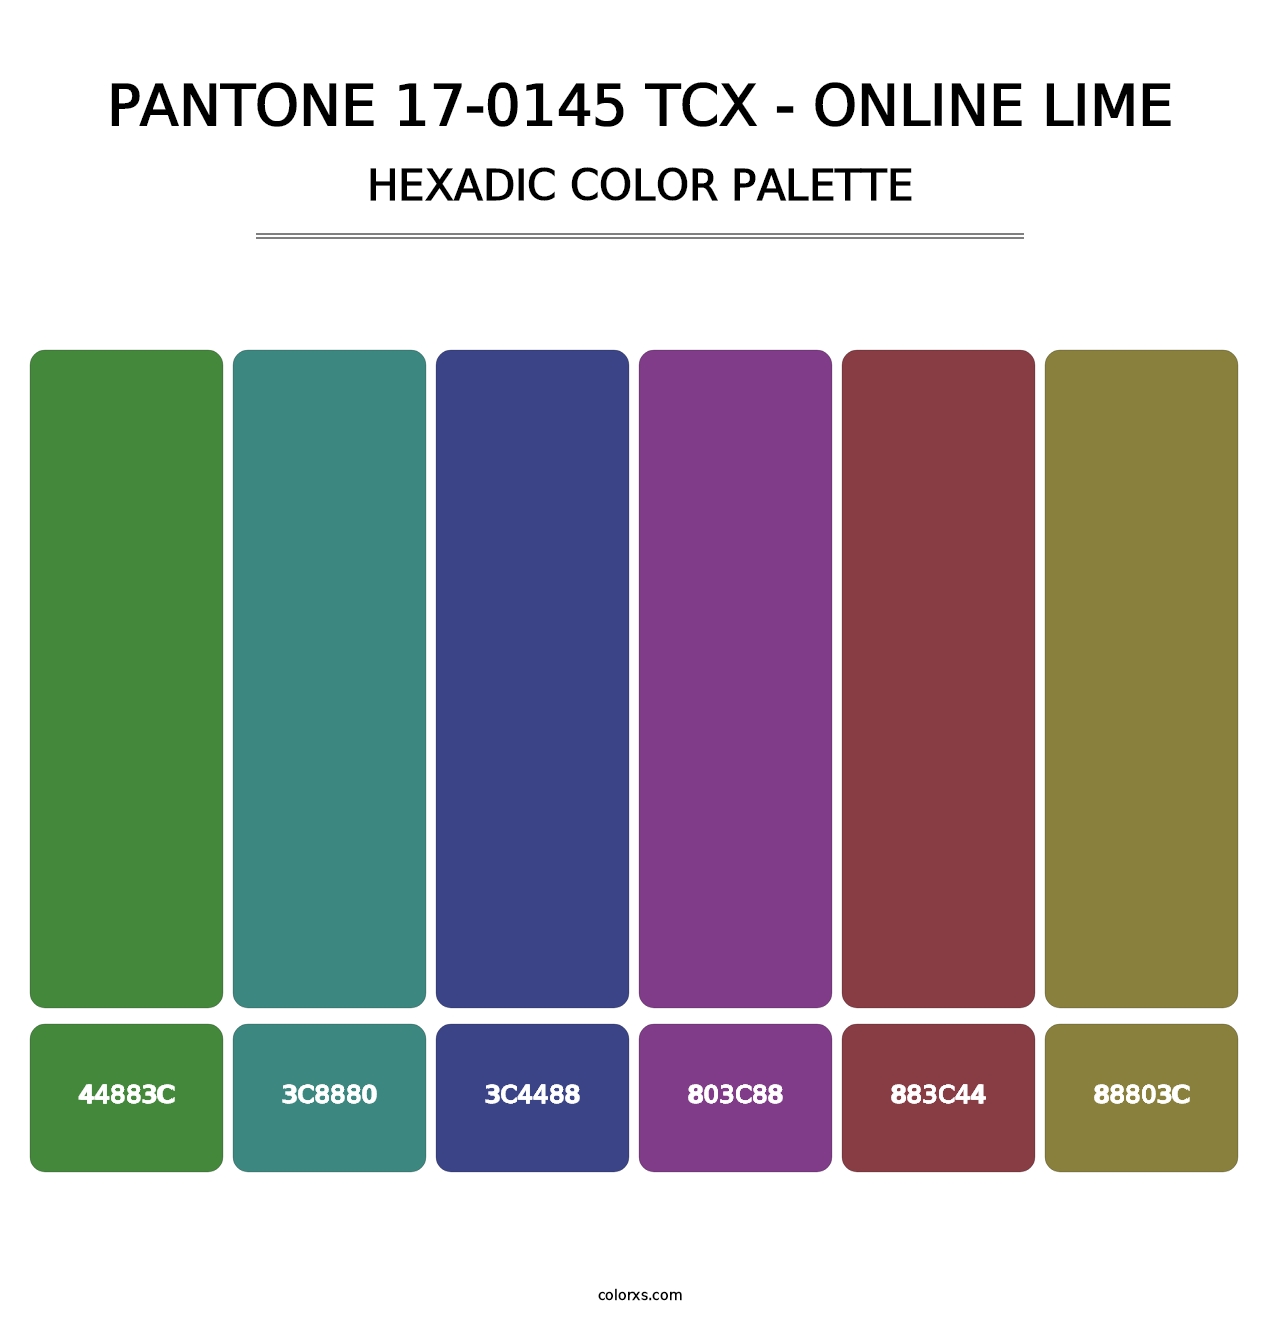 PANTONE 17-0145 TCX - Online Lime - Hexadic Color Palette